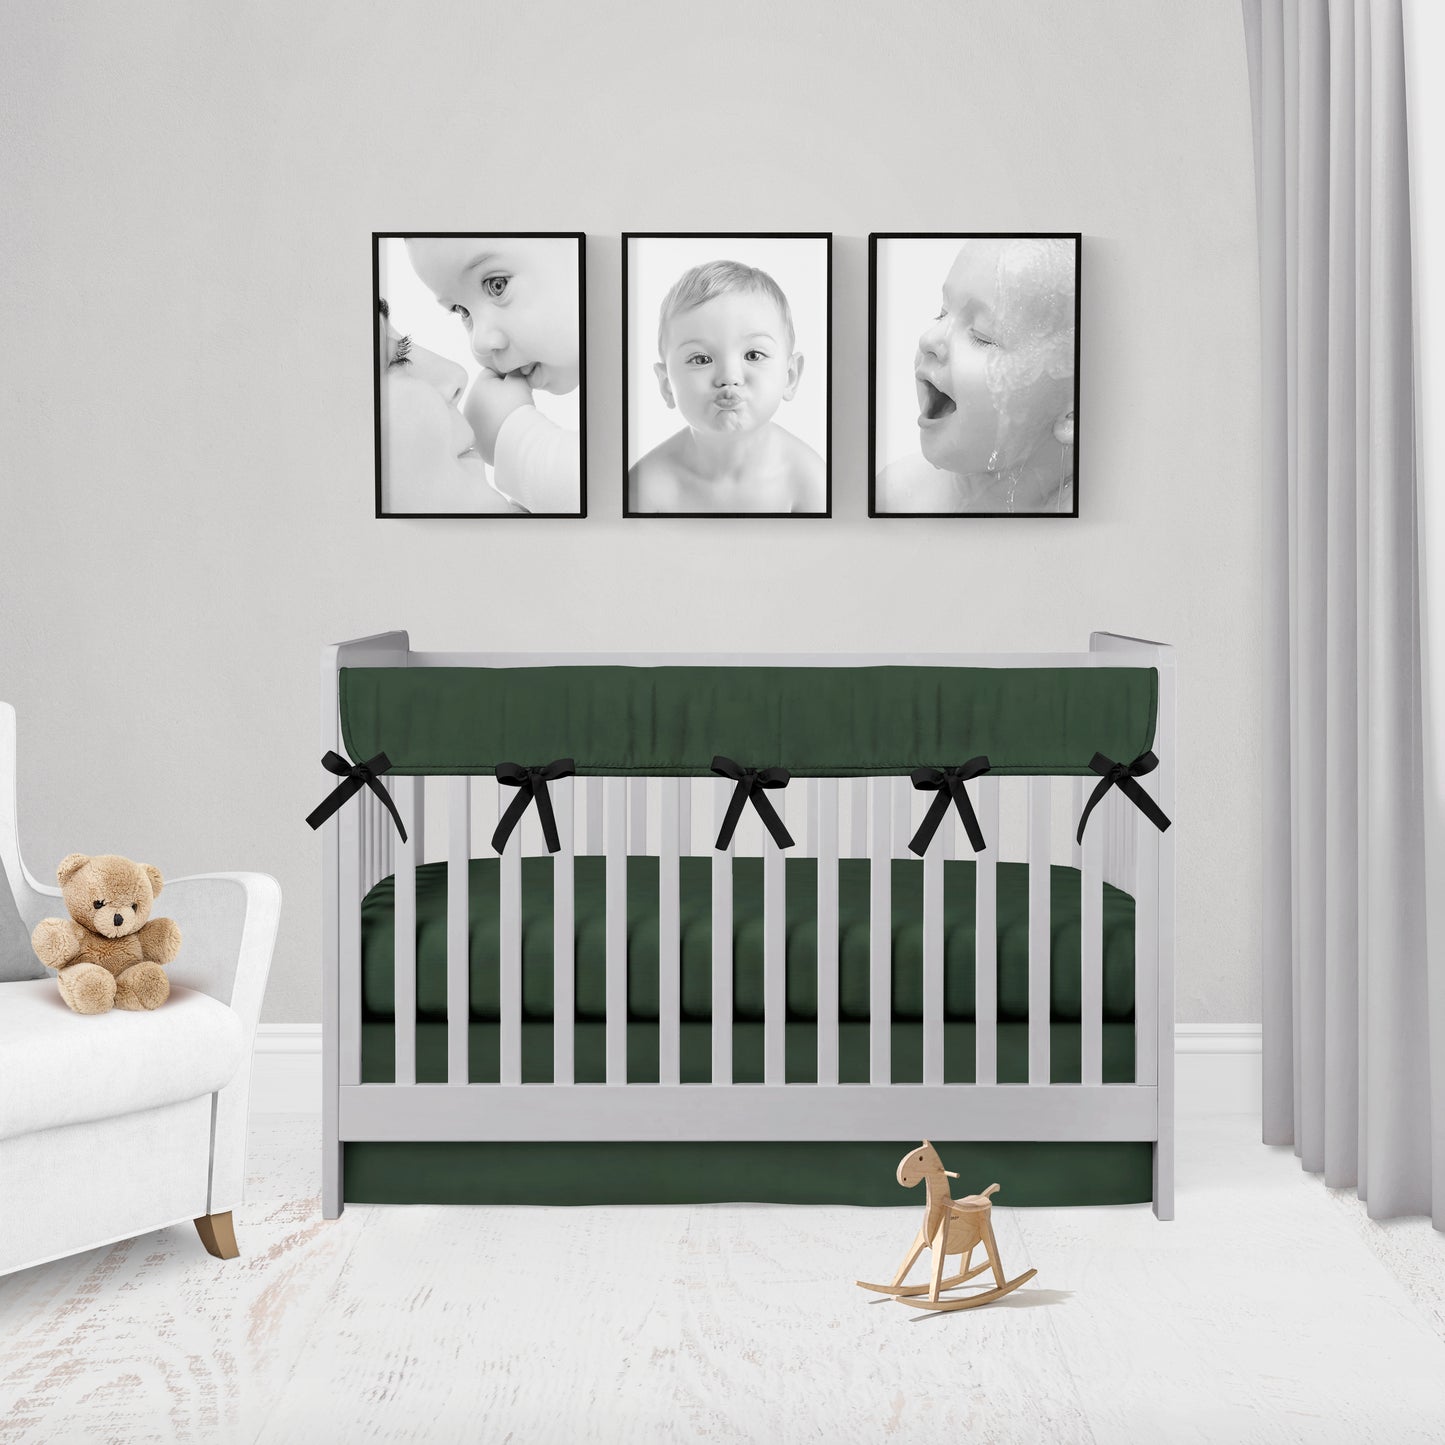 dark hunter green mini crib rail cover with black ties, crib sheet & crib skirt shown in flat